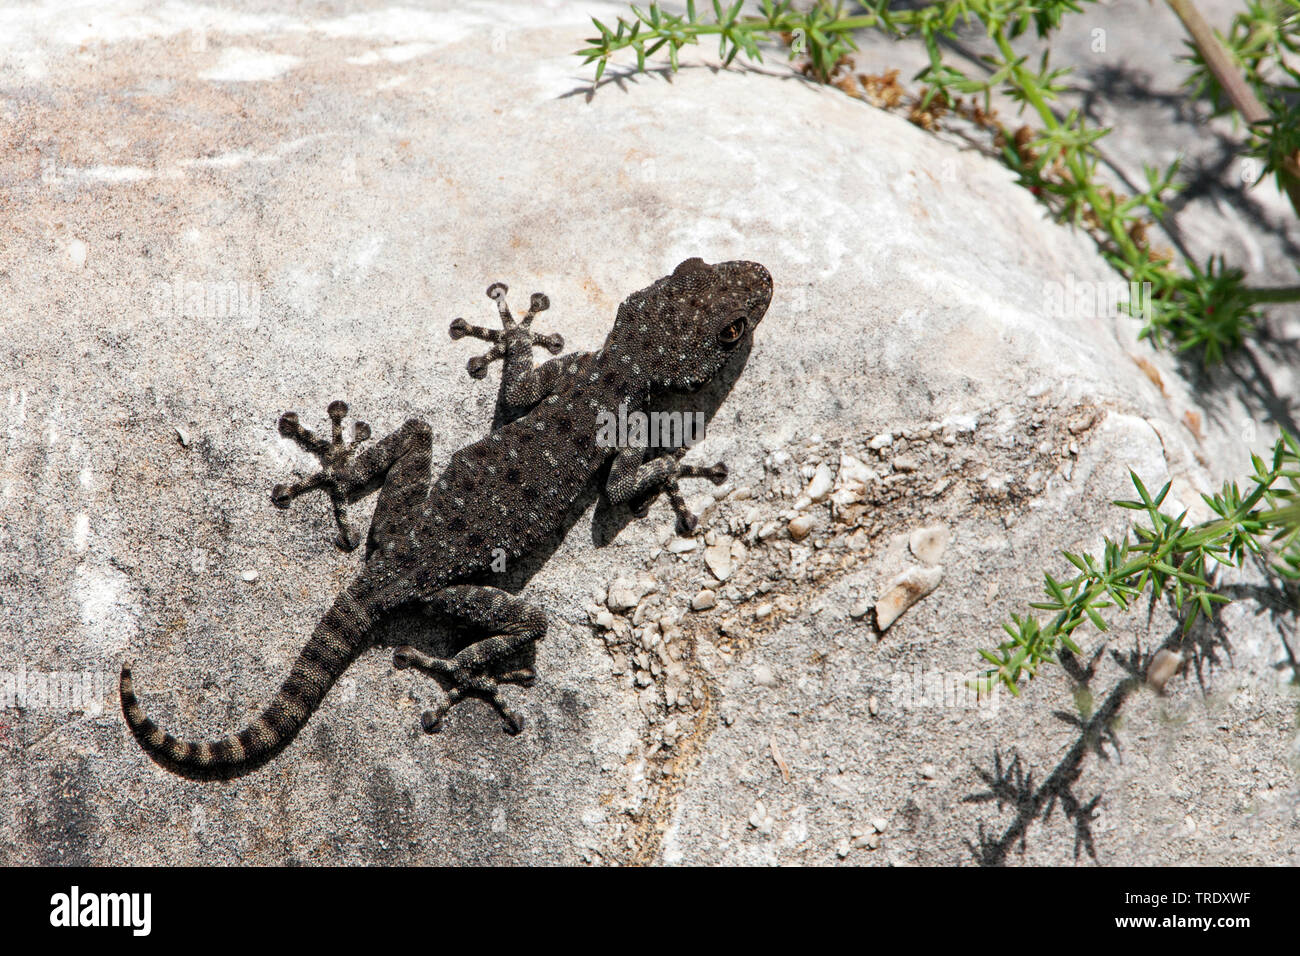 Ventola-dita (Gecko Ptyodactylus puiseuxi), seduta su una roccia, Israele Foto Stock